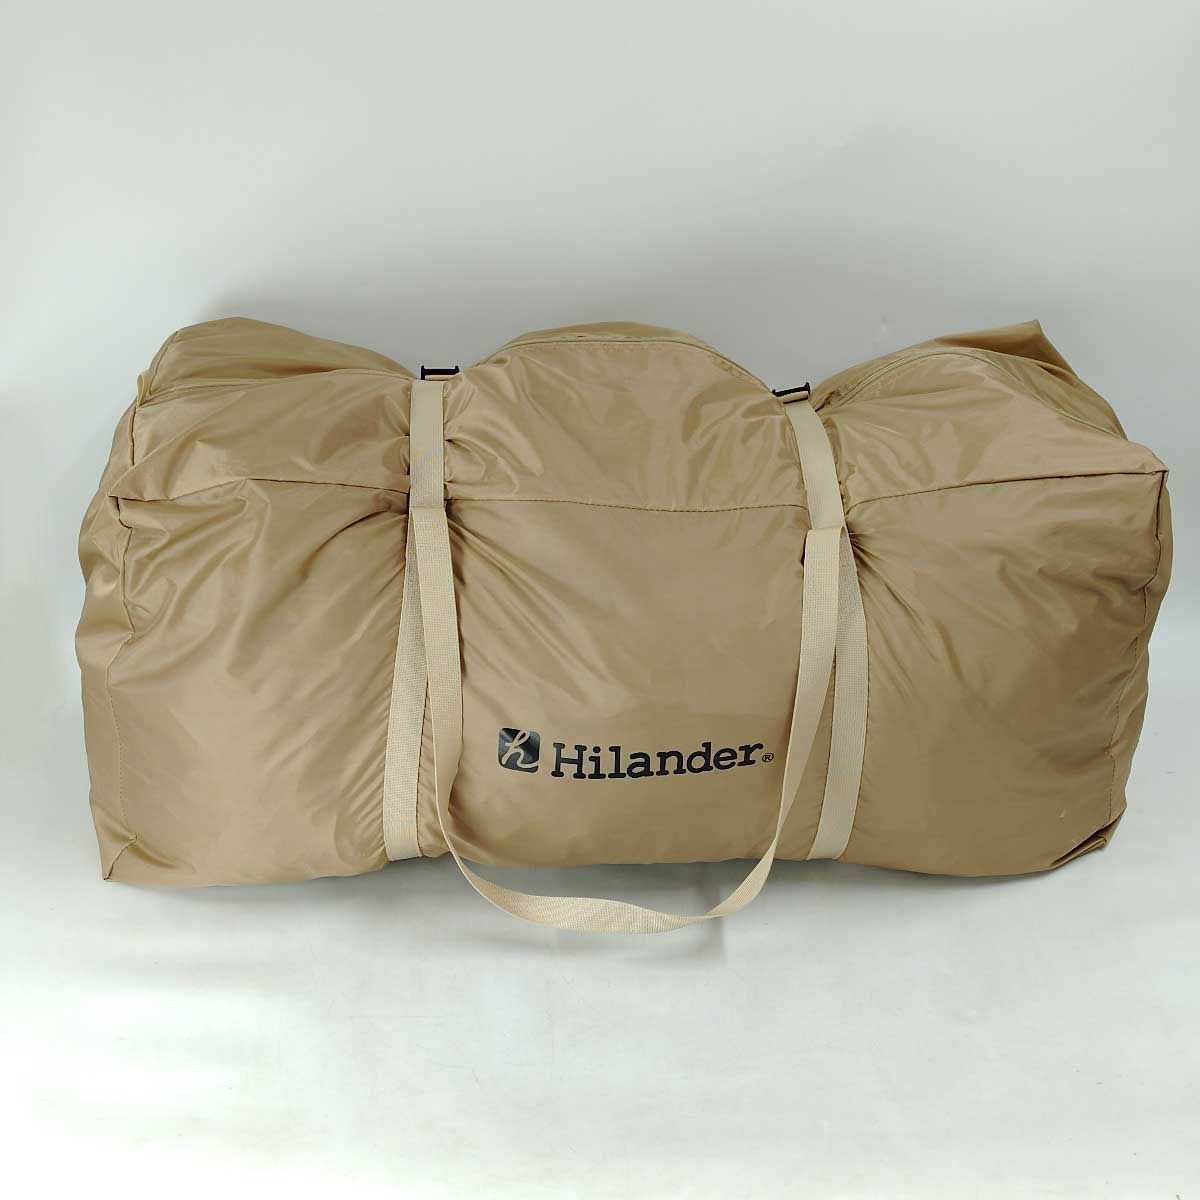 Hilander(ハイランダー) NAGASAWA 300 - アウトドア